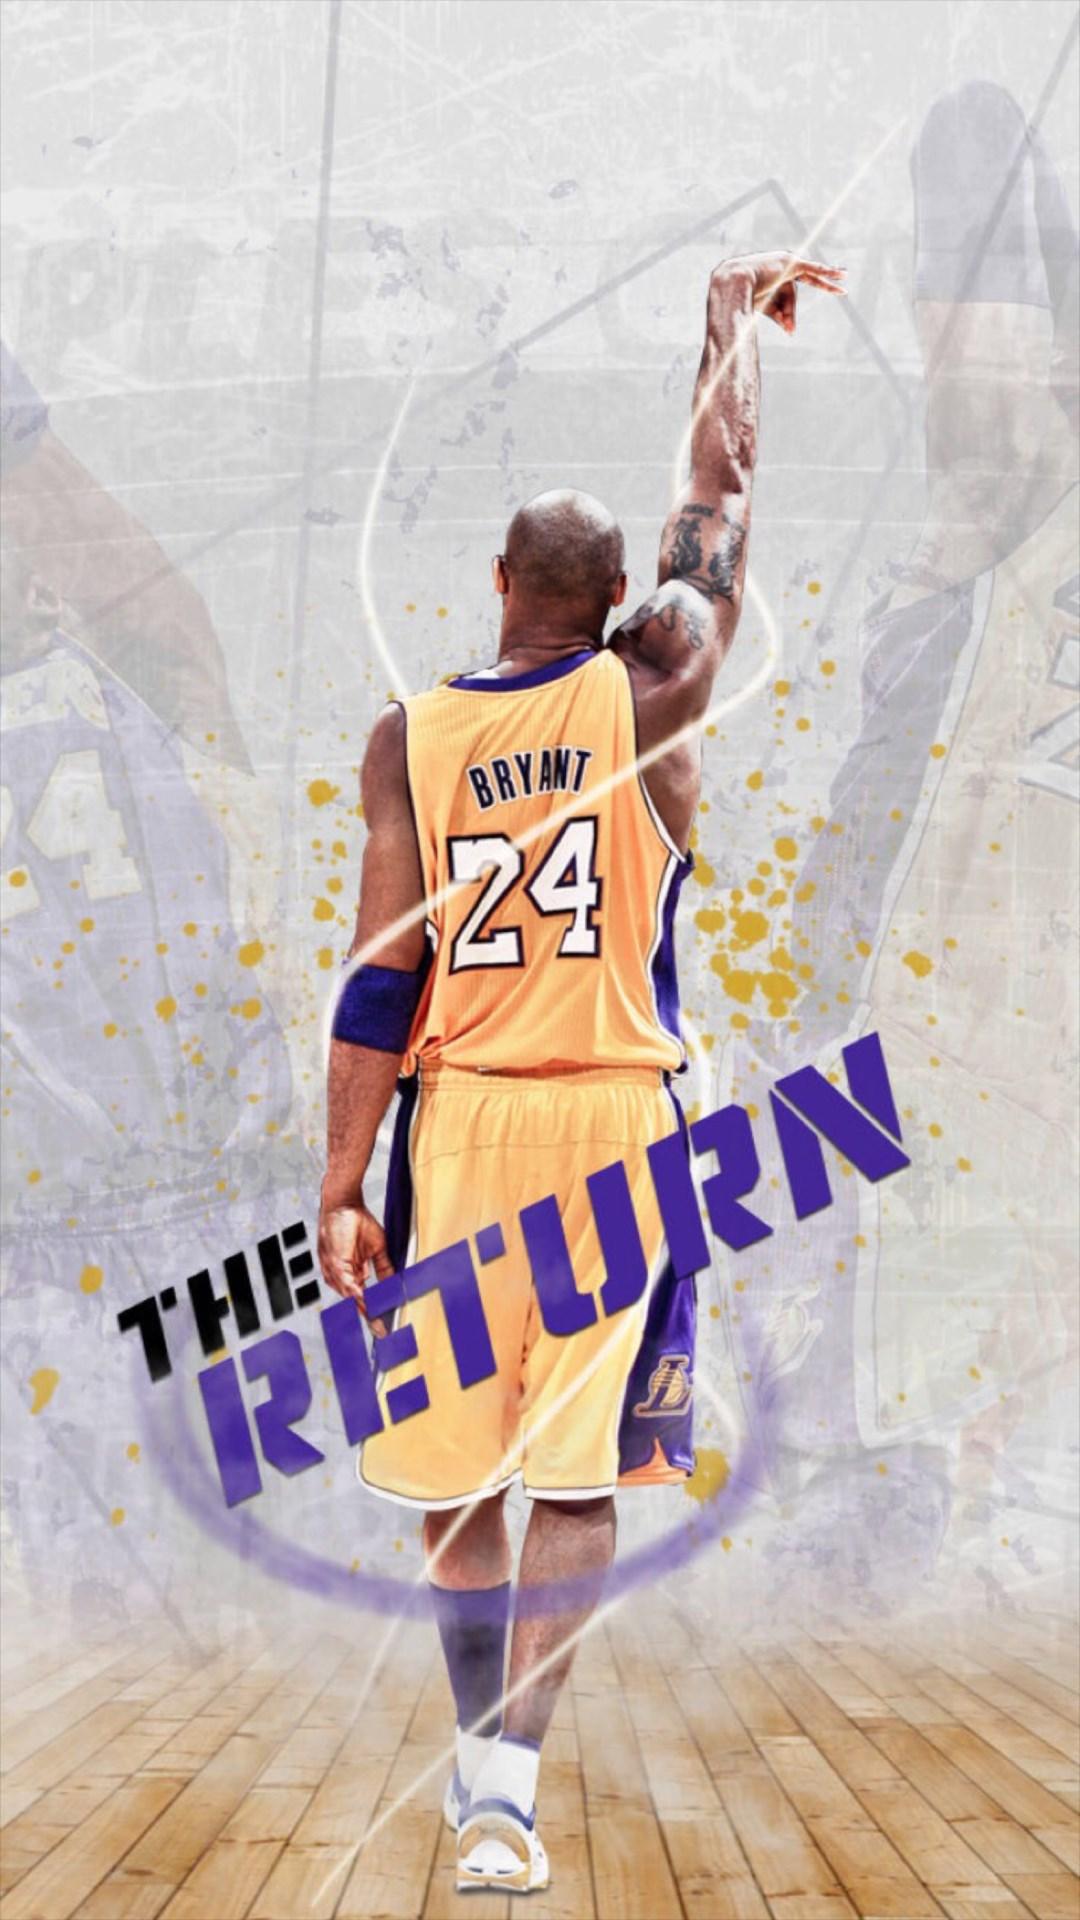 Bryant Kobe NBA Sports Super Star iPhone 8 Wallpaper Free